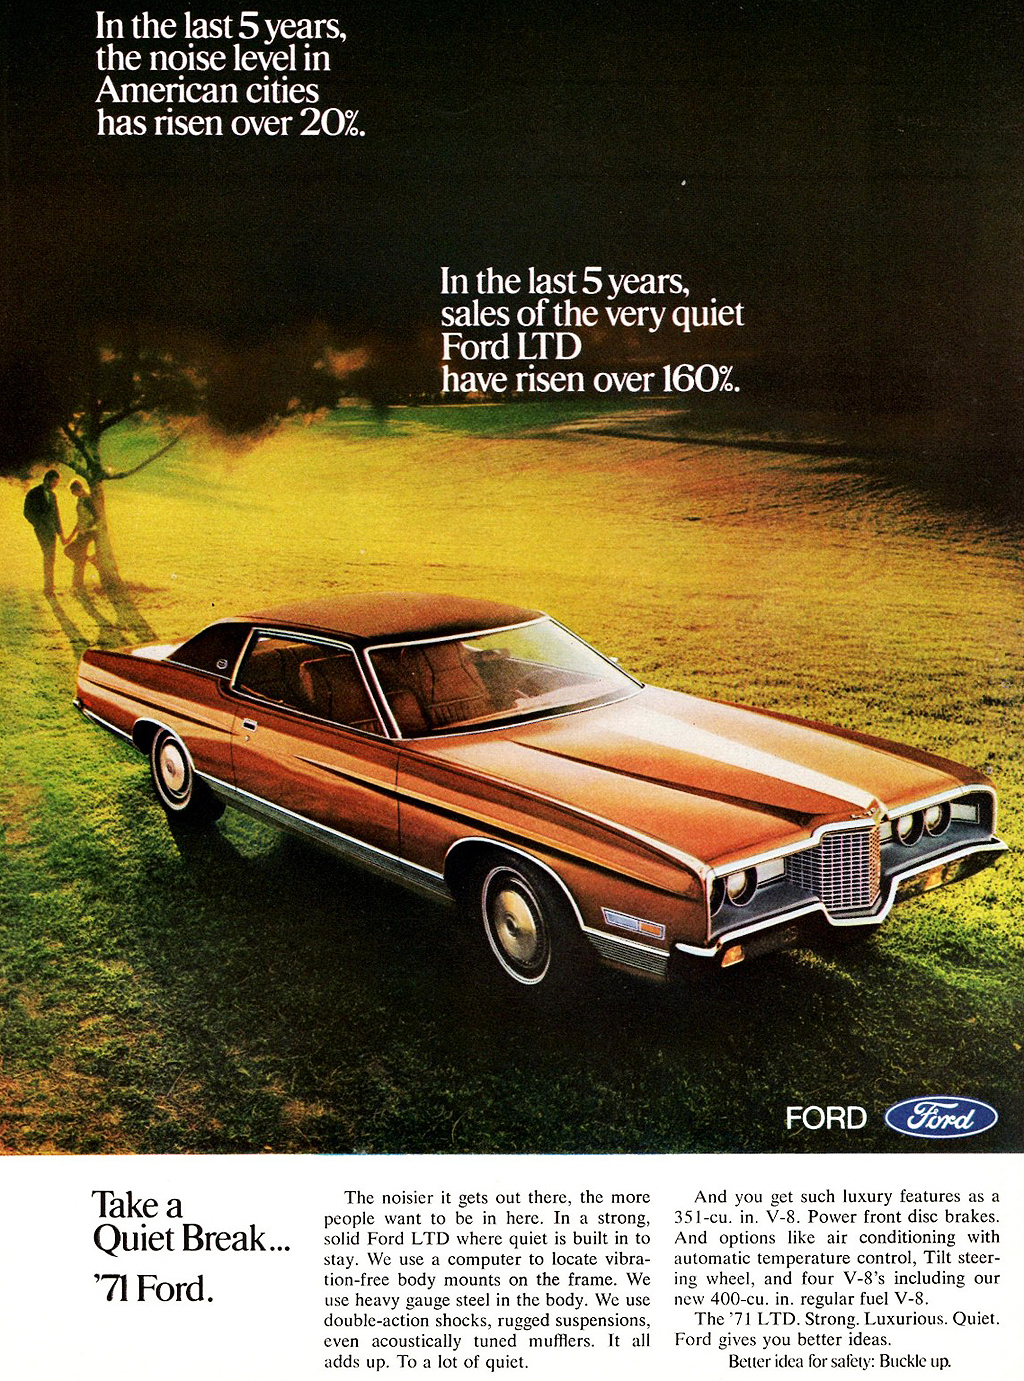 1971 Ford LTD Brougham